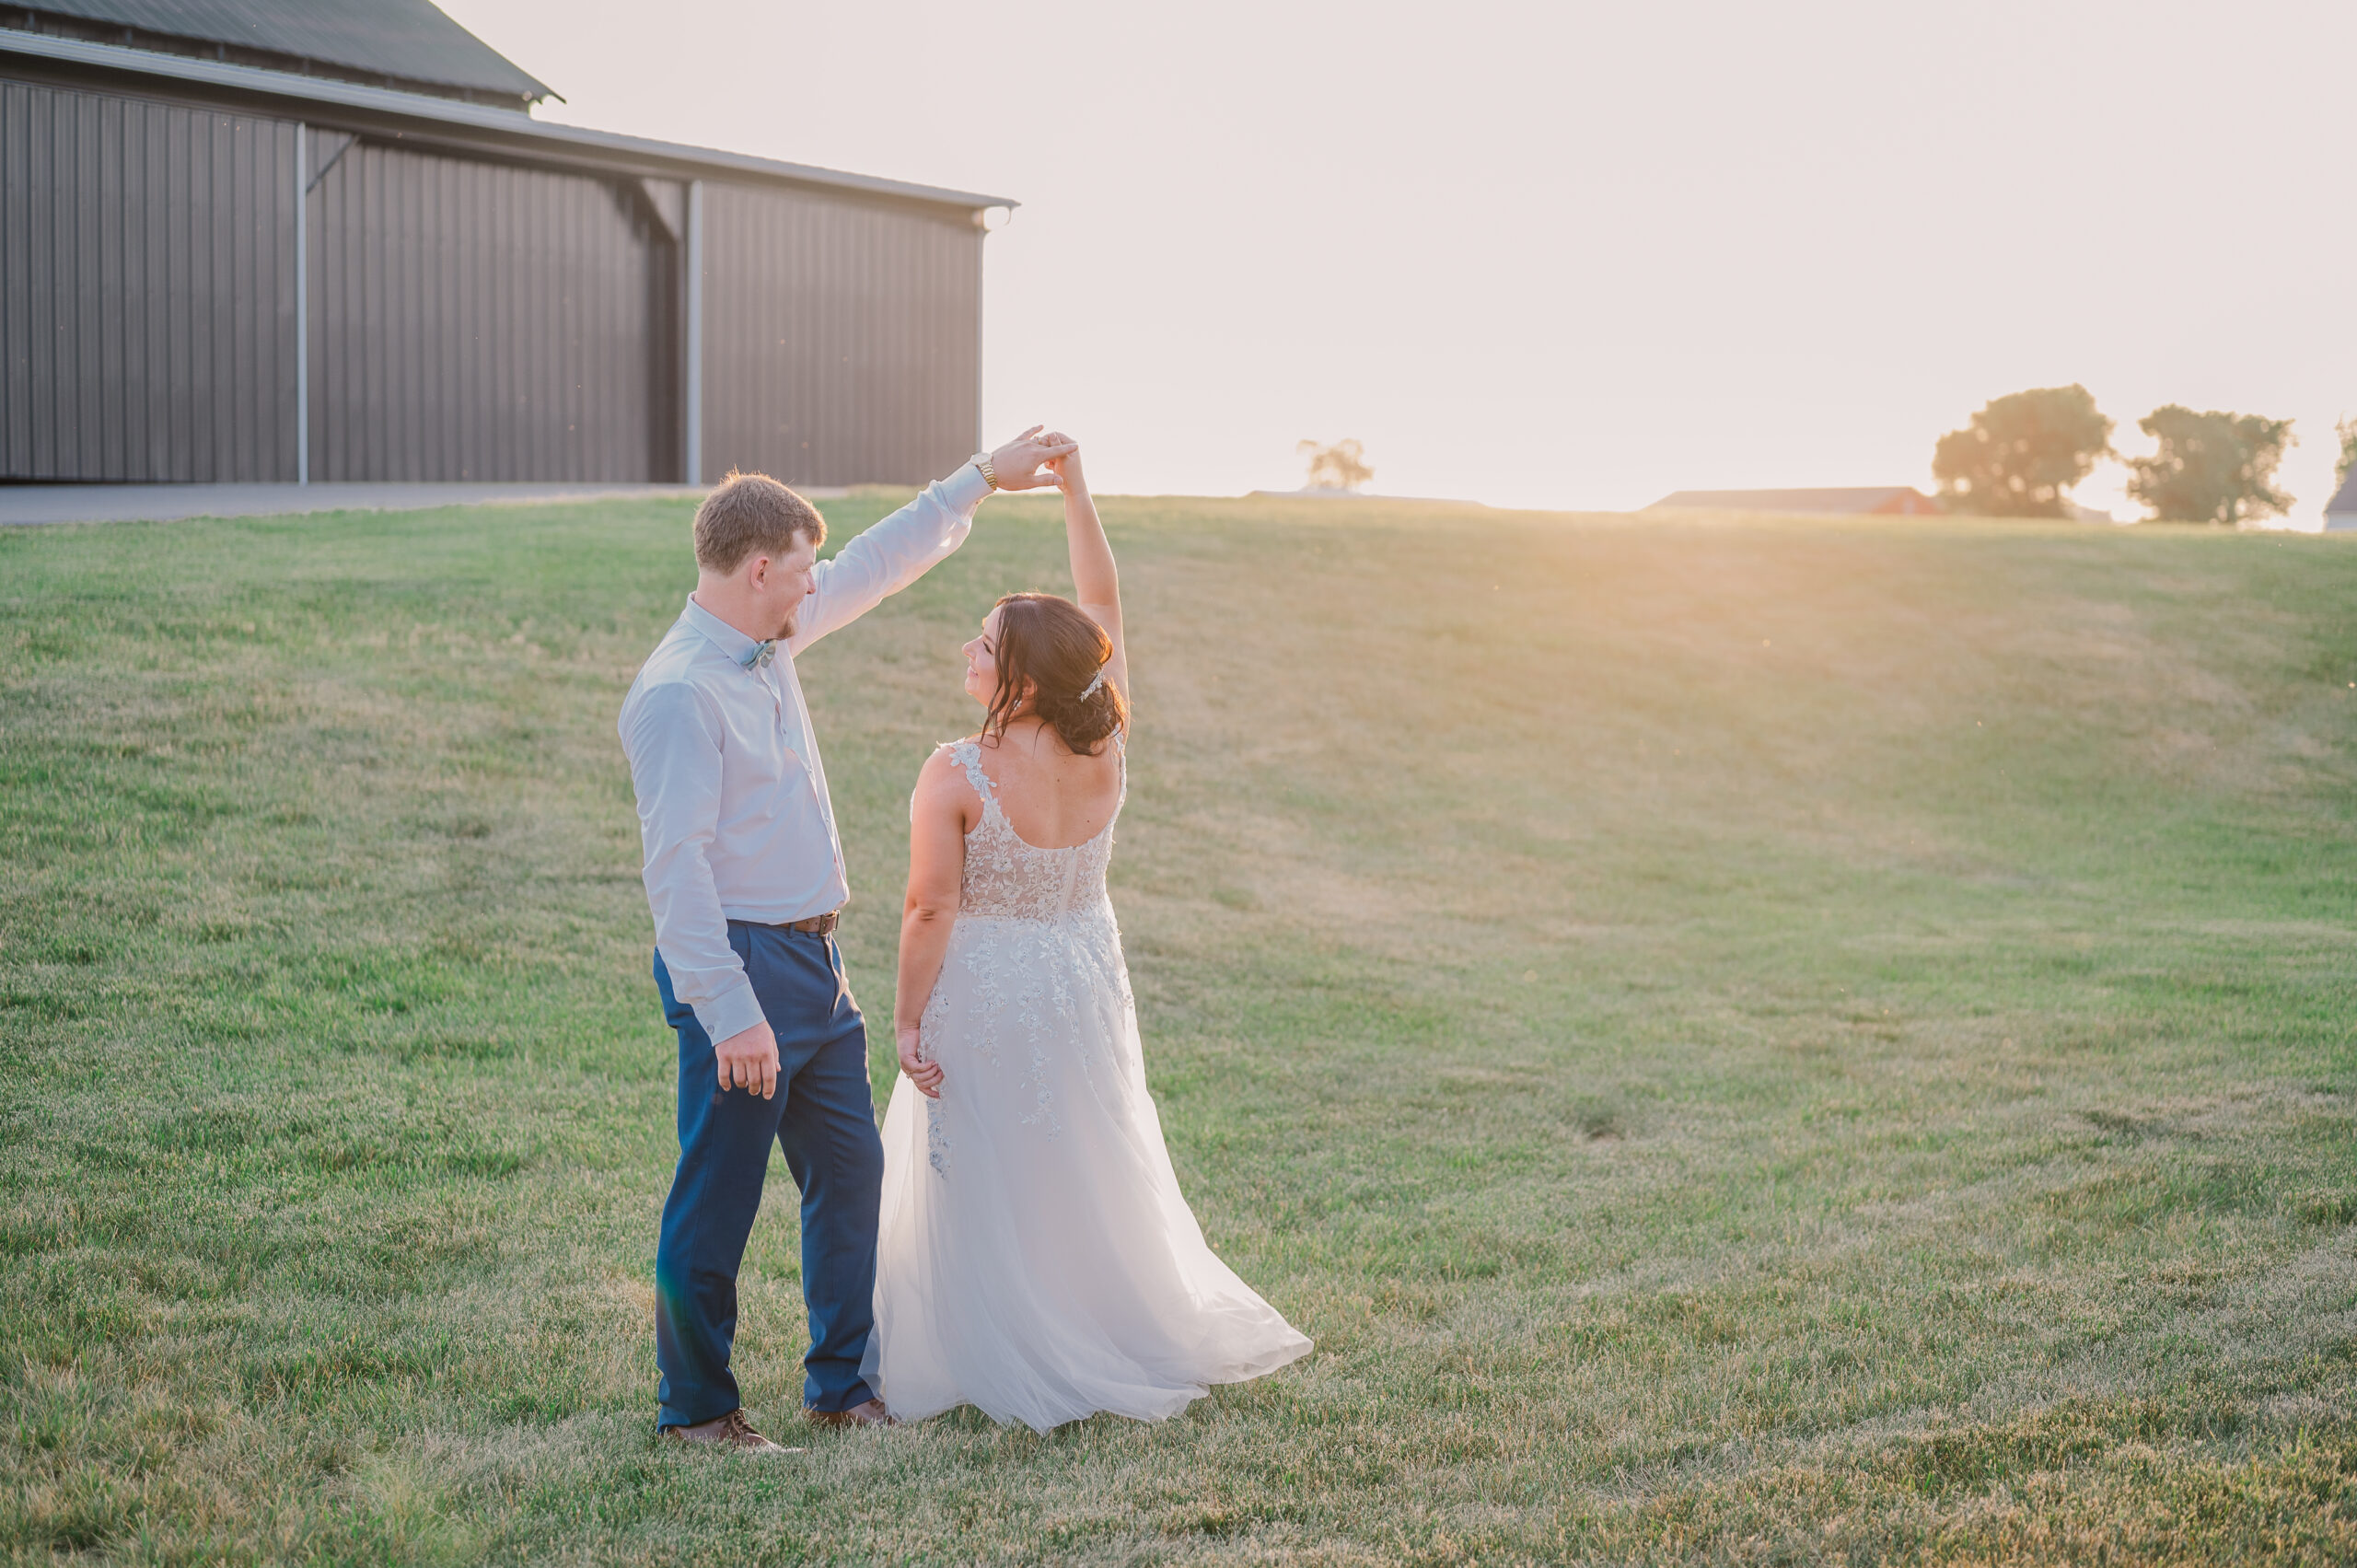 Sunset Portrait, Bride twirling at Kentucky Wedding Venue